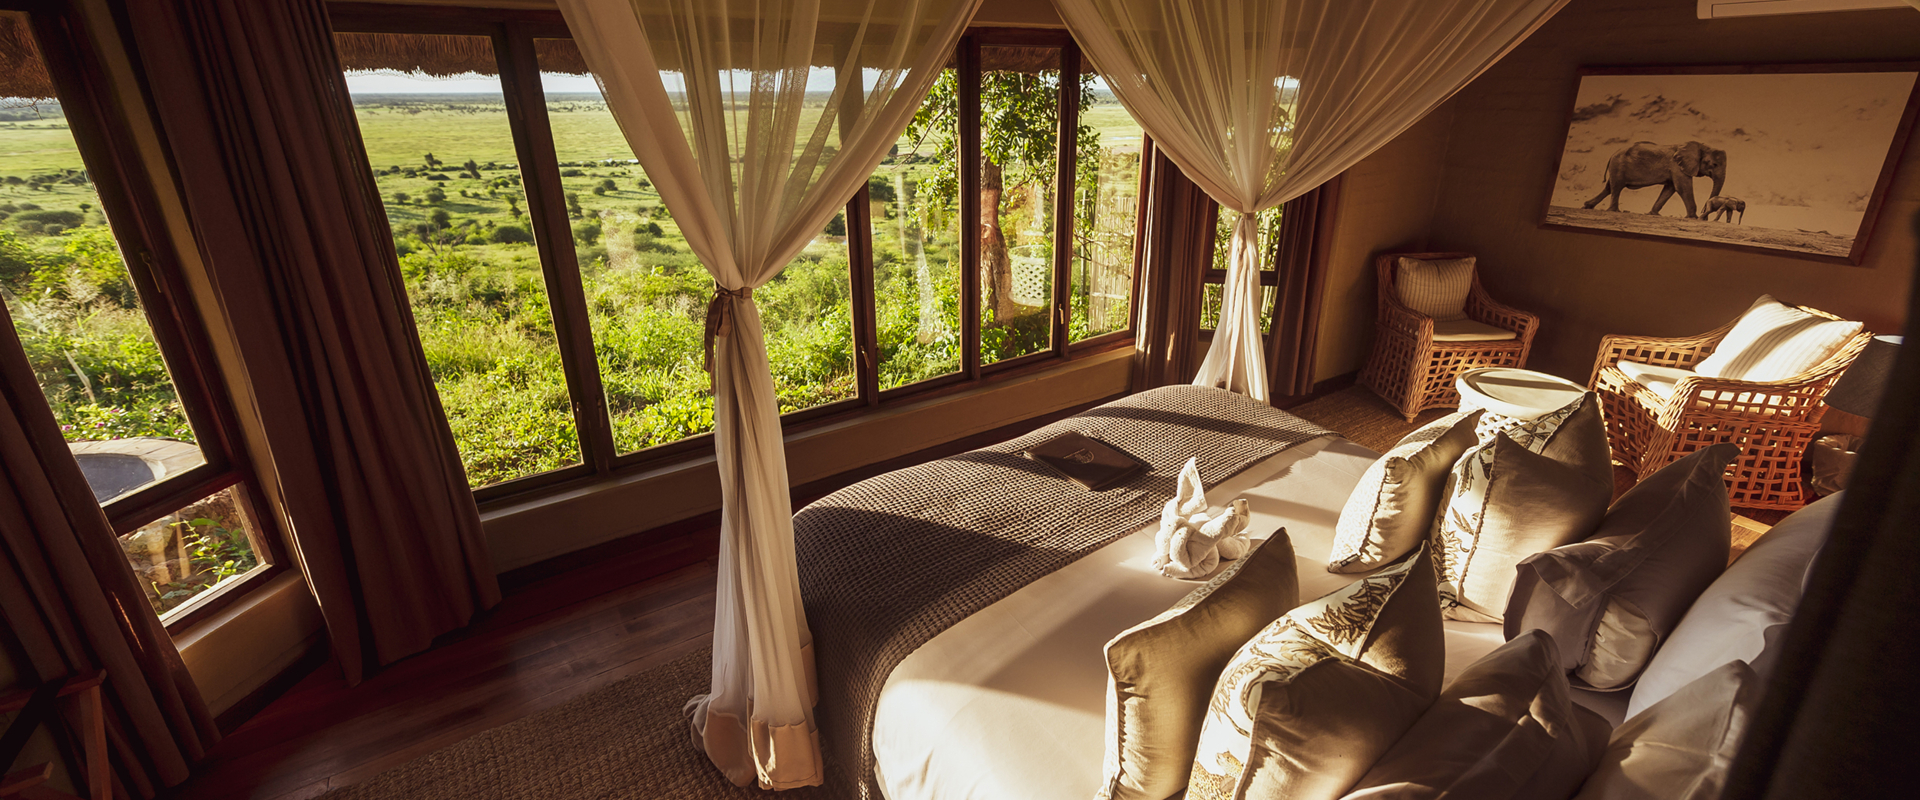 Web Machaba Botswana Ngoma Safari Lodge Luxury Room Overlooking Landscape